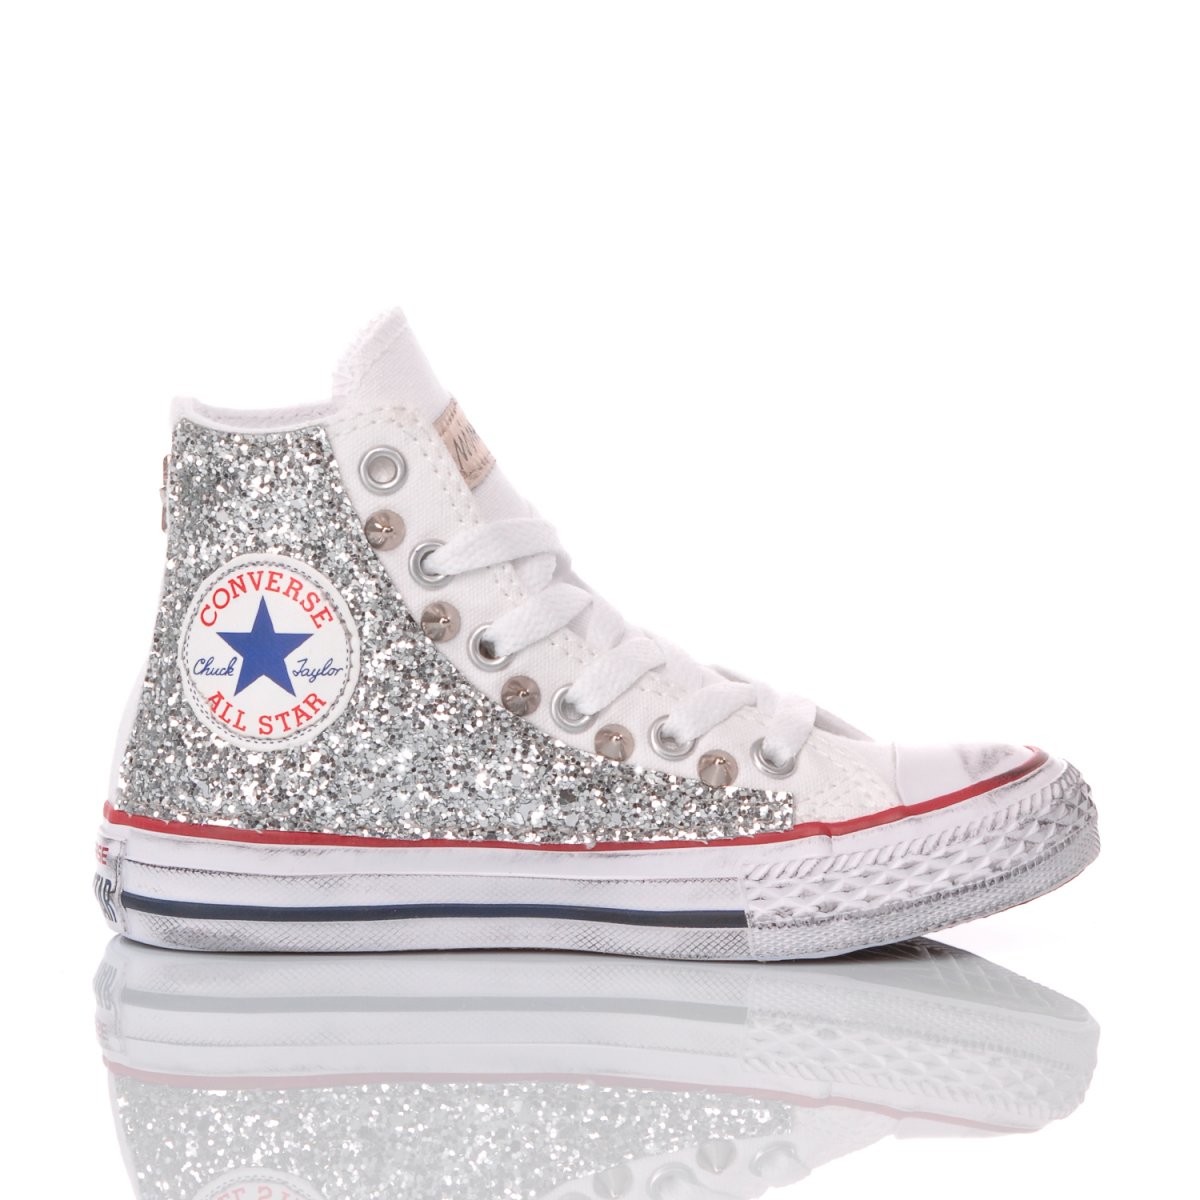 converse silver glitter shoes